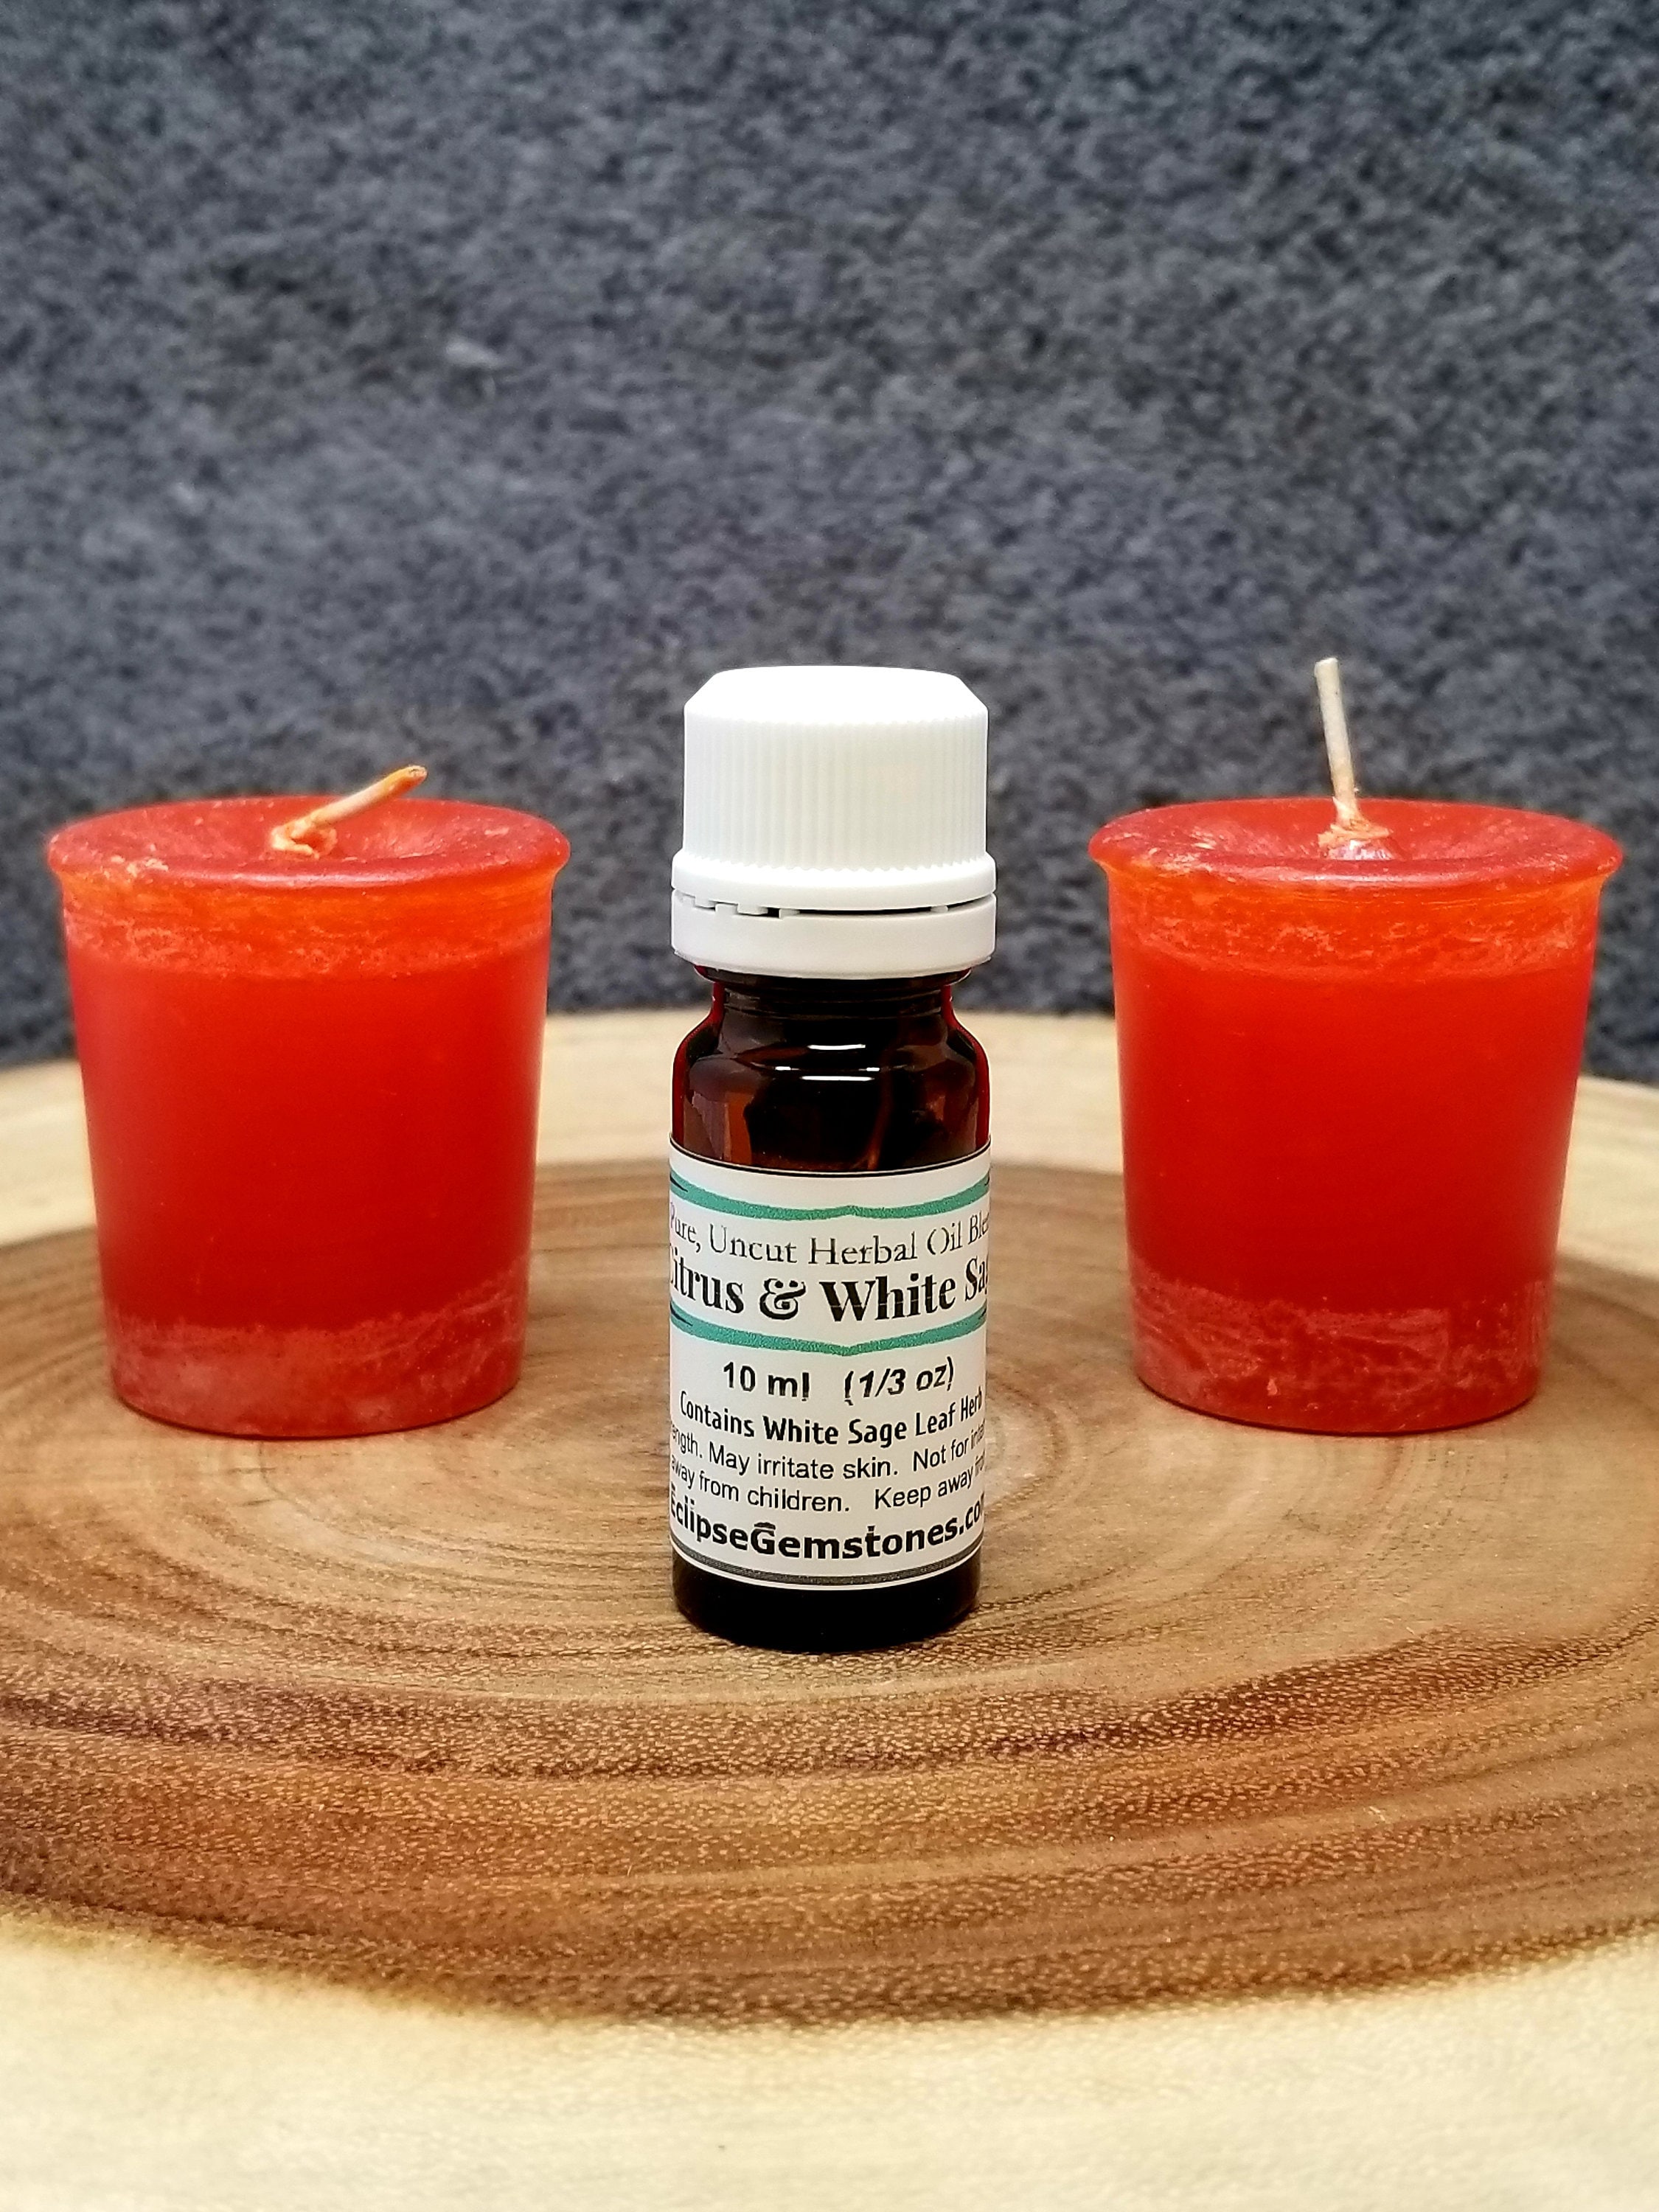 Citrus & White Sage Herbal Oil Blend - 10 Ml - 1/3 Oz Handcrafted With Herbs Eclipse Gemstones Brand